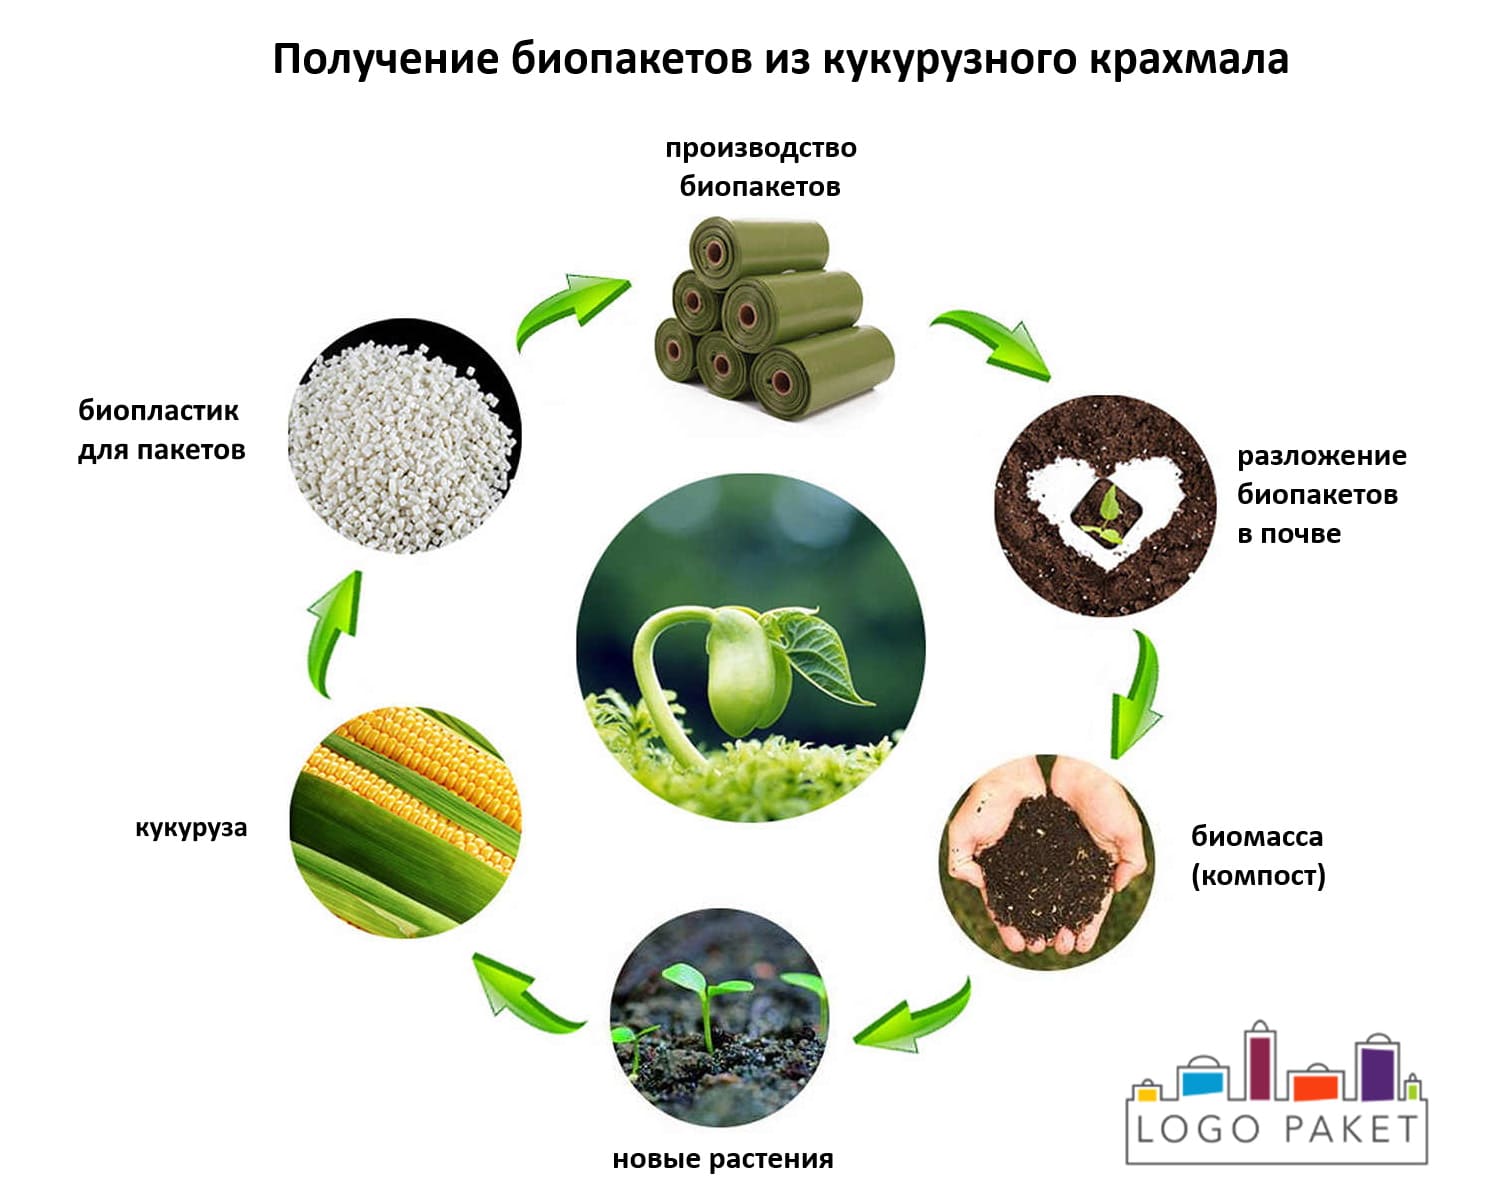 Производство биопакетов из кукурузы инфографика